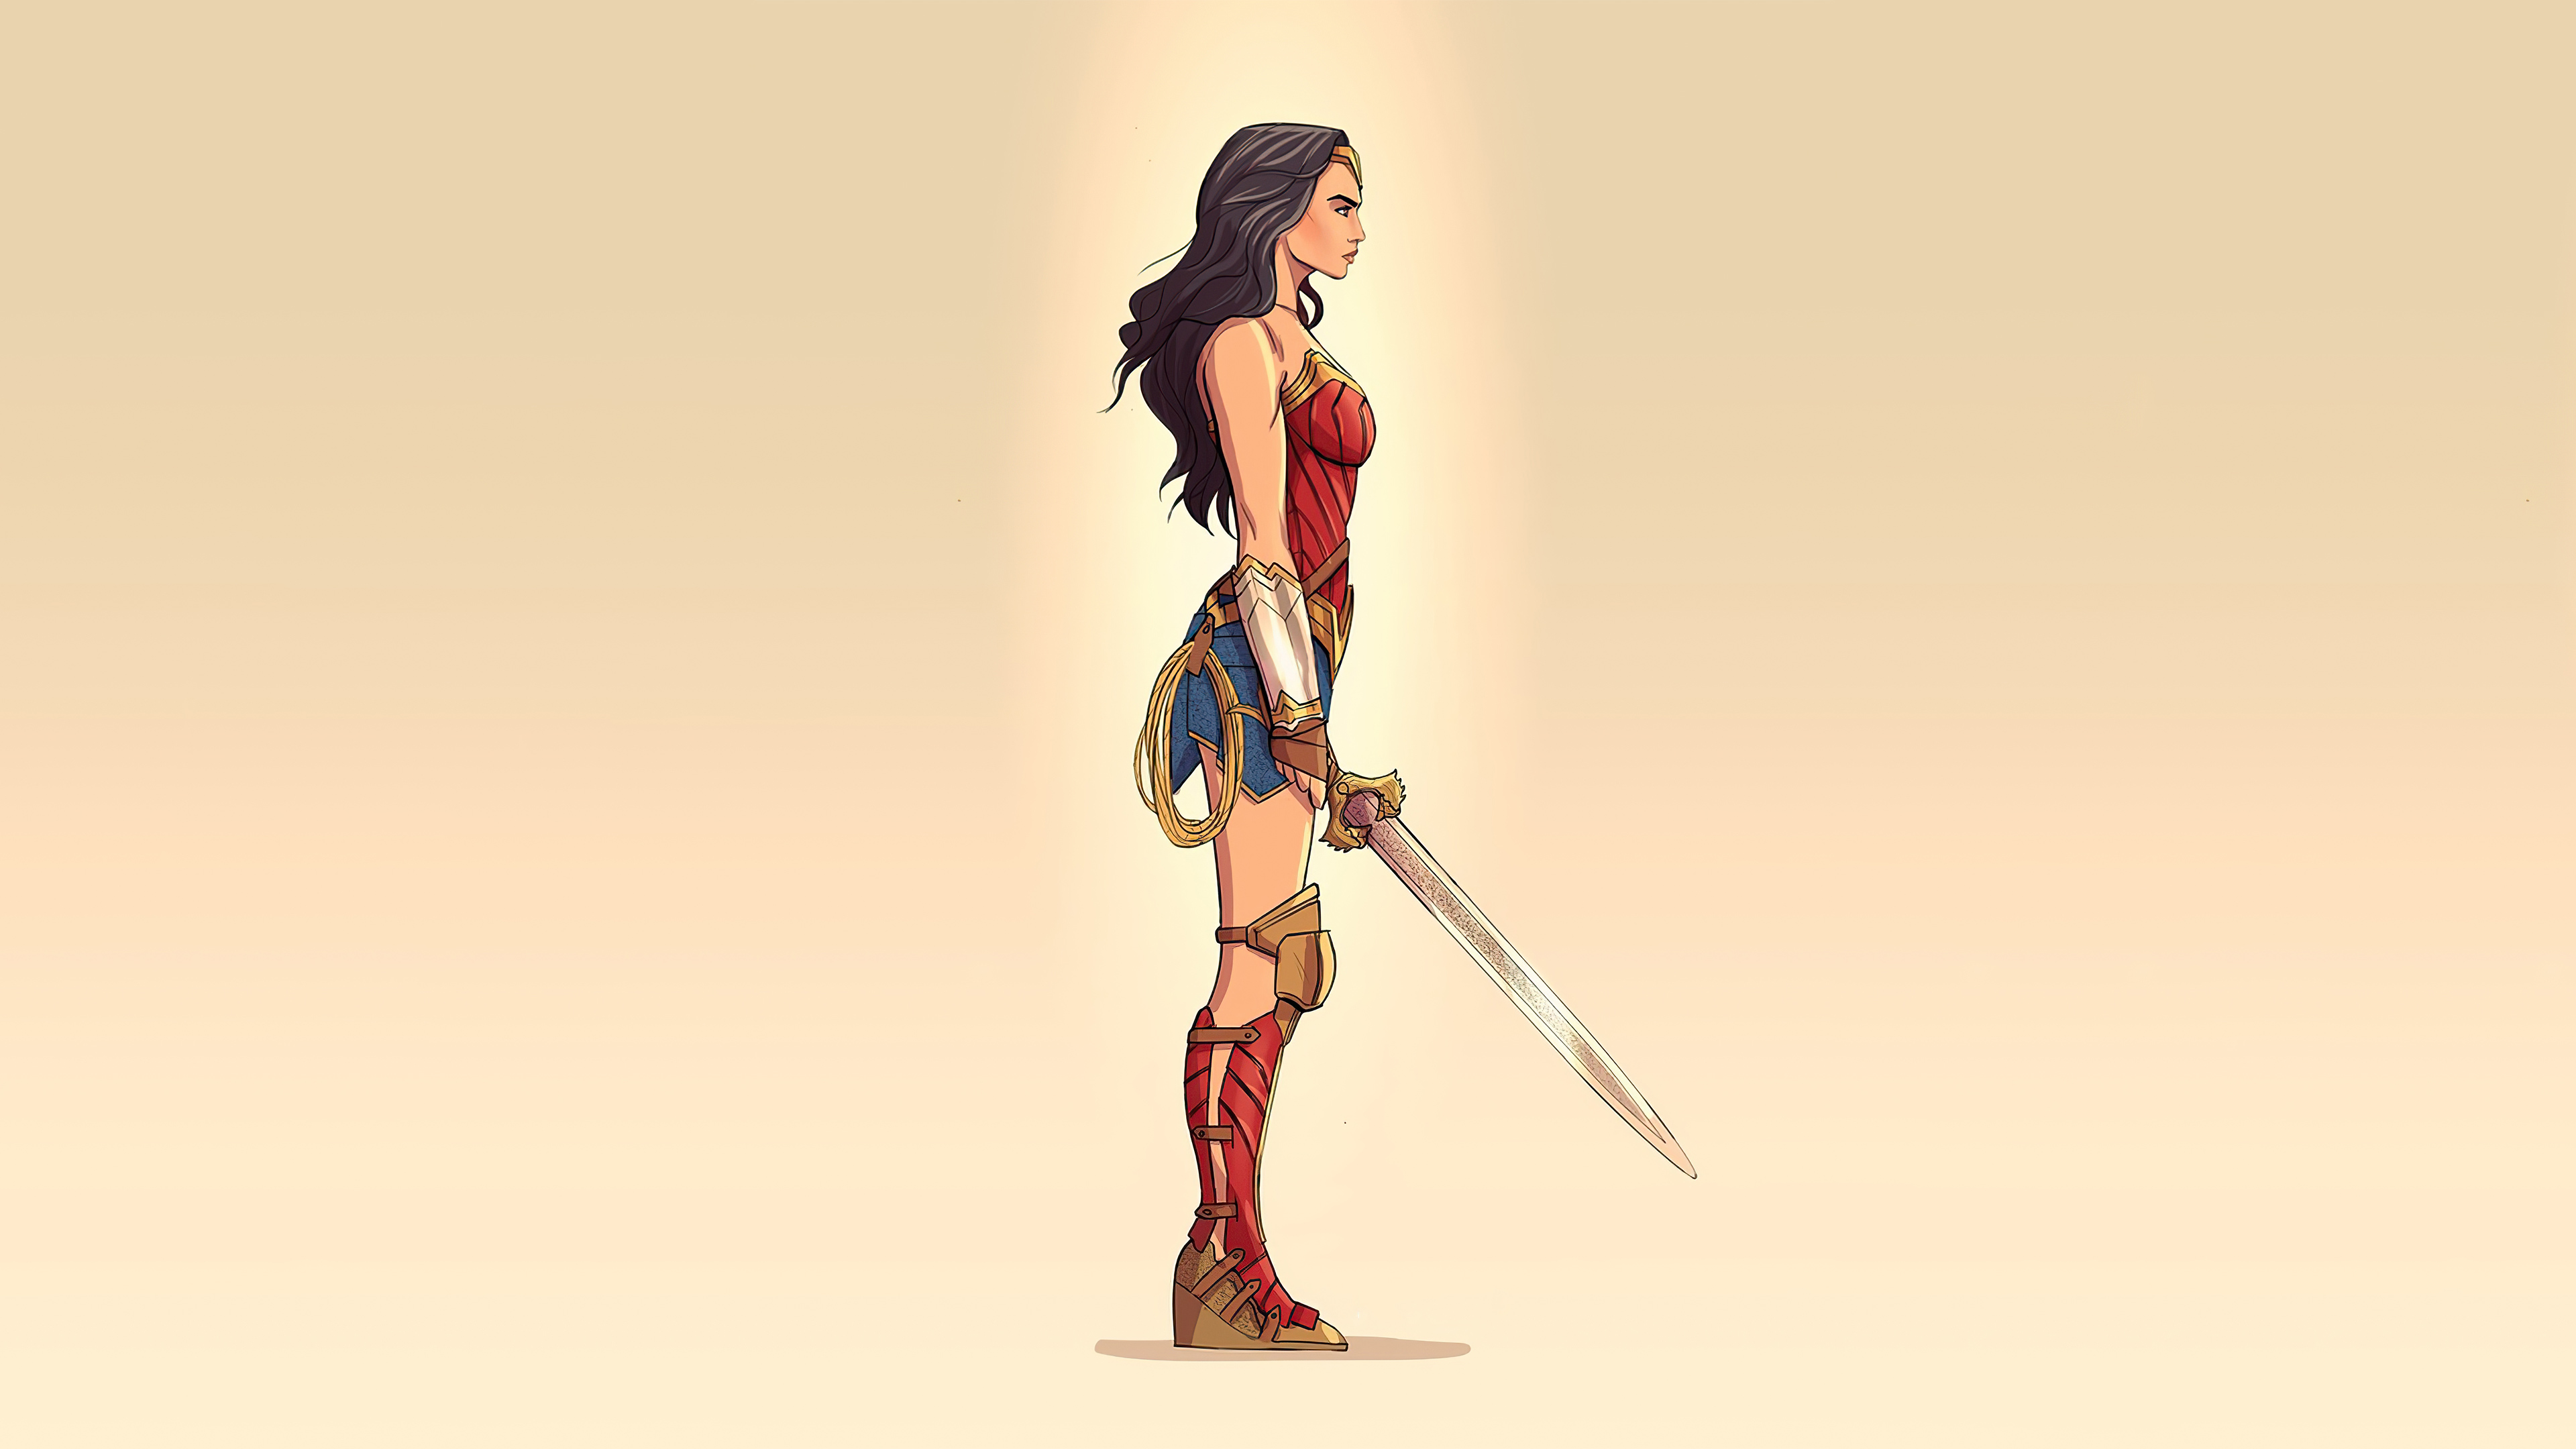 4K Wonder Woman Minimalism 2020 Wallpapers